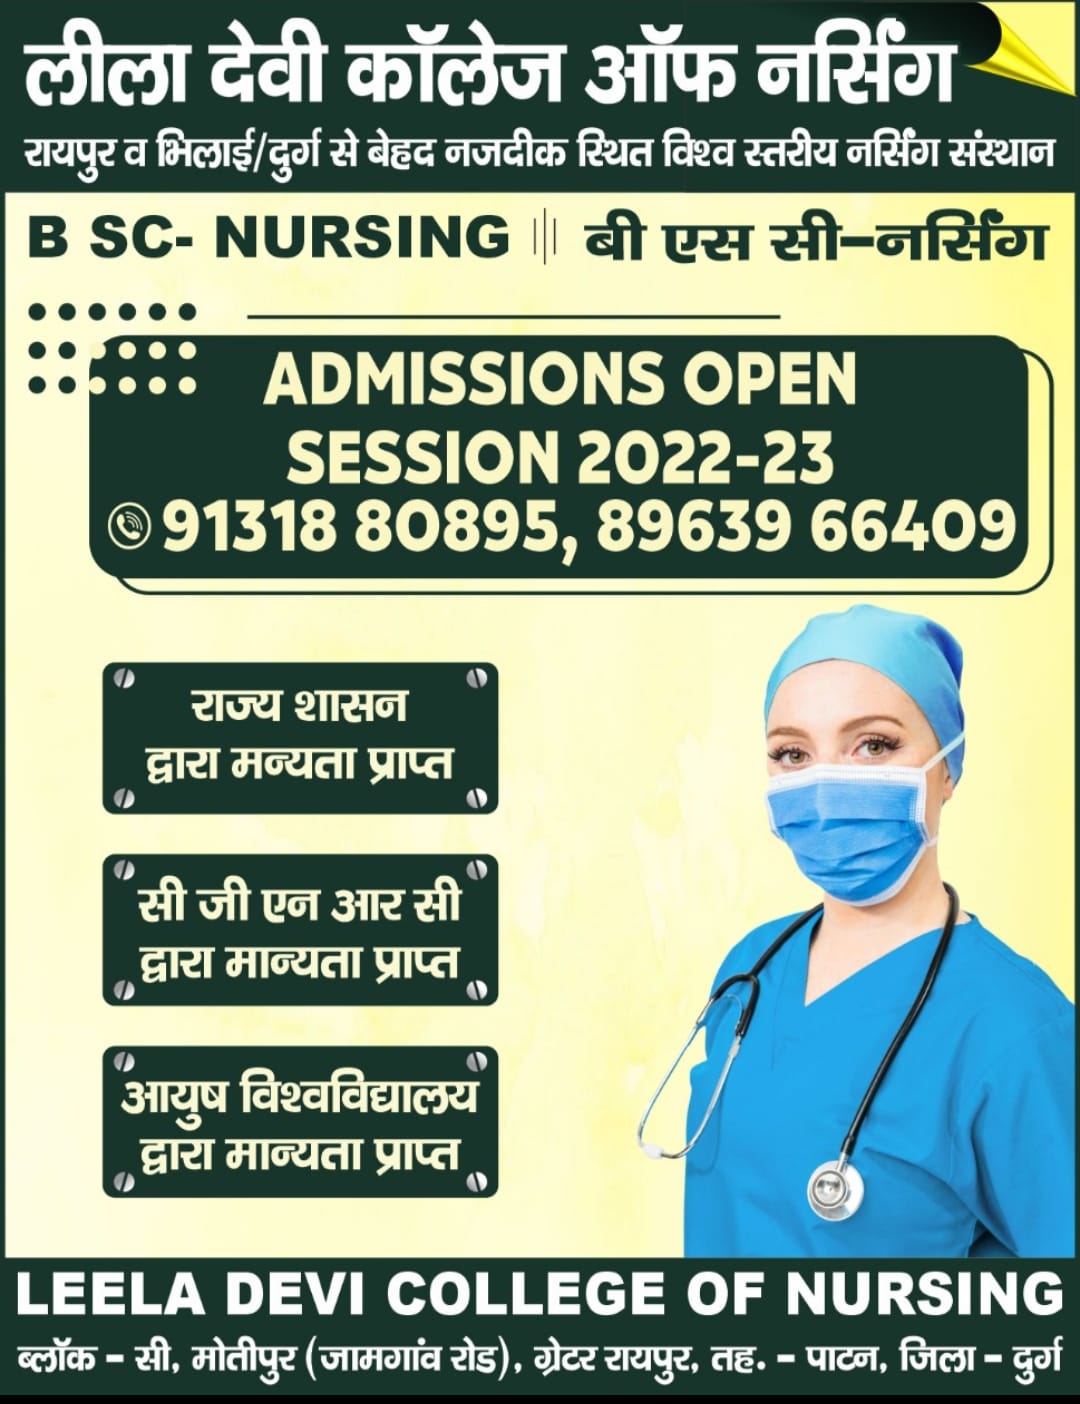 Leela Devi College of Nursing Admission Open for BSC Nursing (Session 2022-2023) Hostel Facility Available